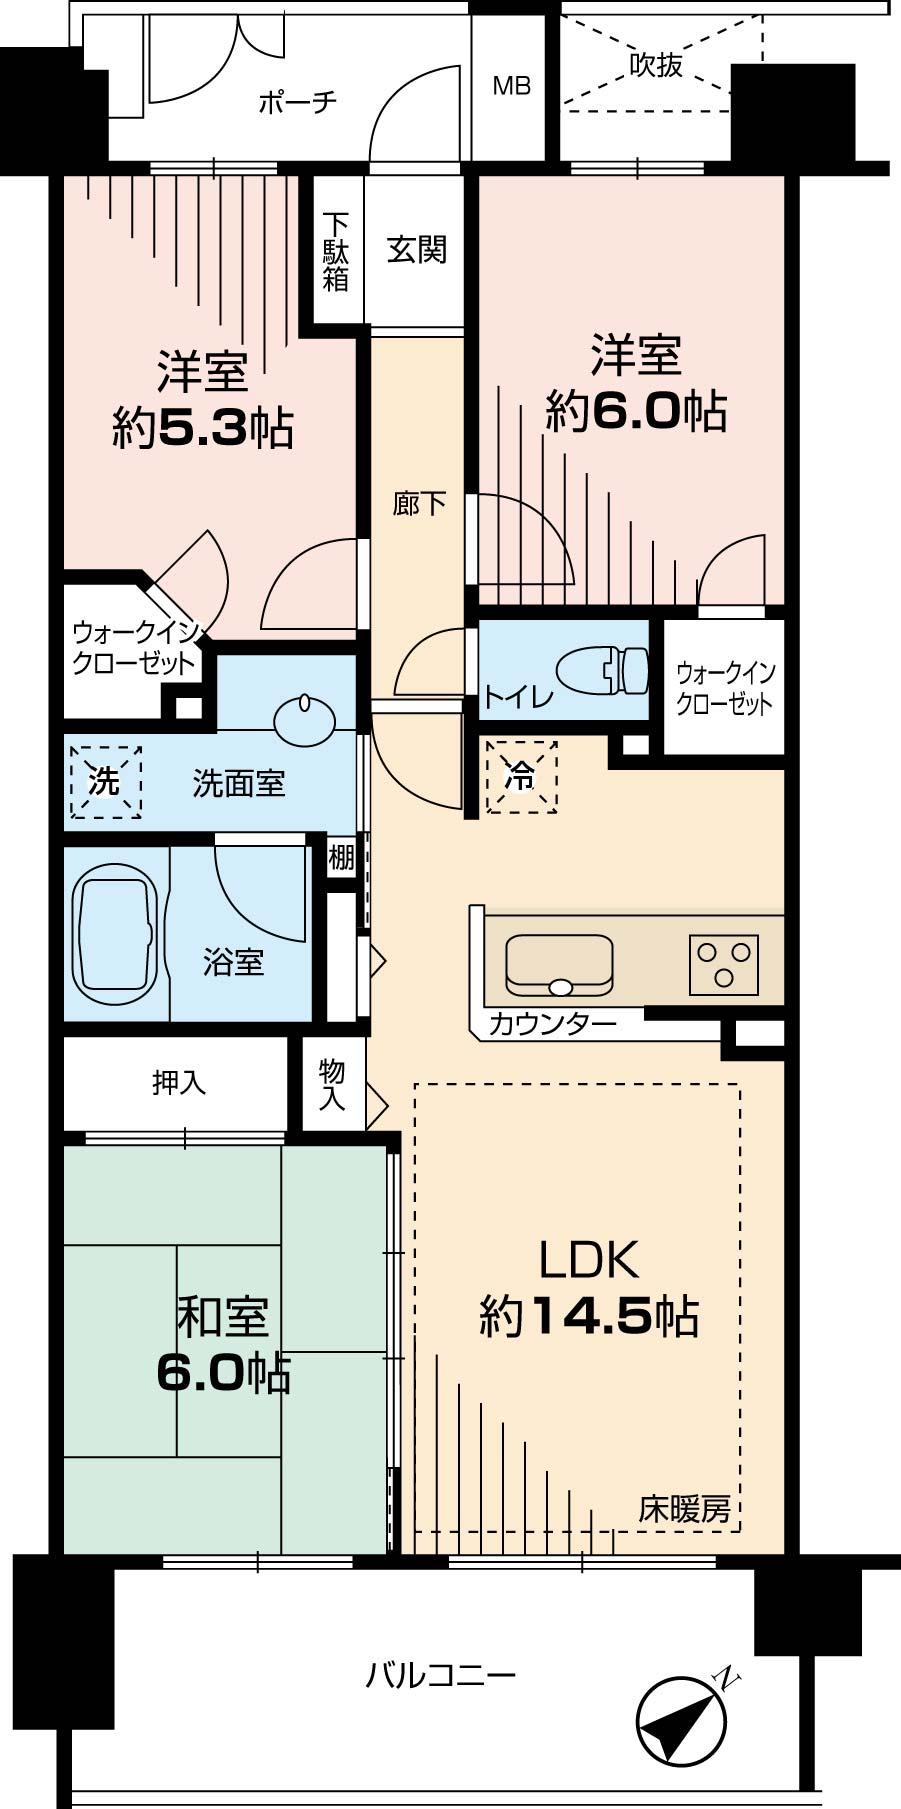 Floor plan. 3LDK, Price 24,800,000 yen, Footprint 70.2 sq m , Balcony area 12 sq m